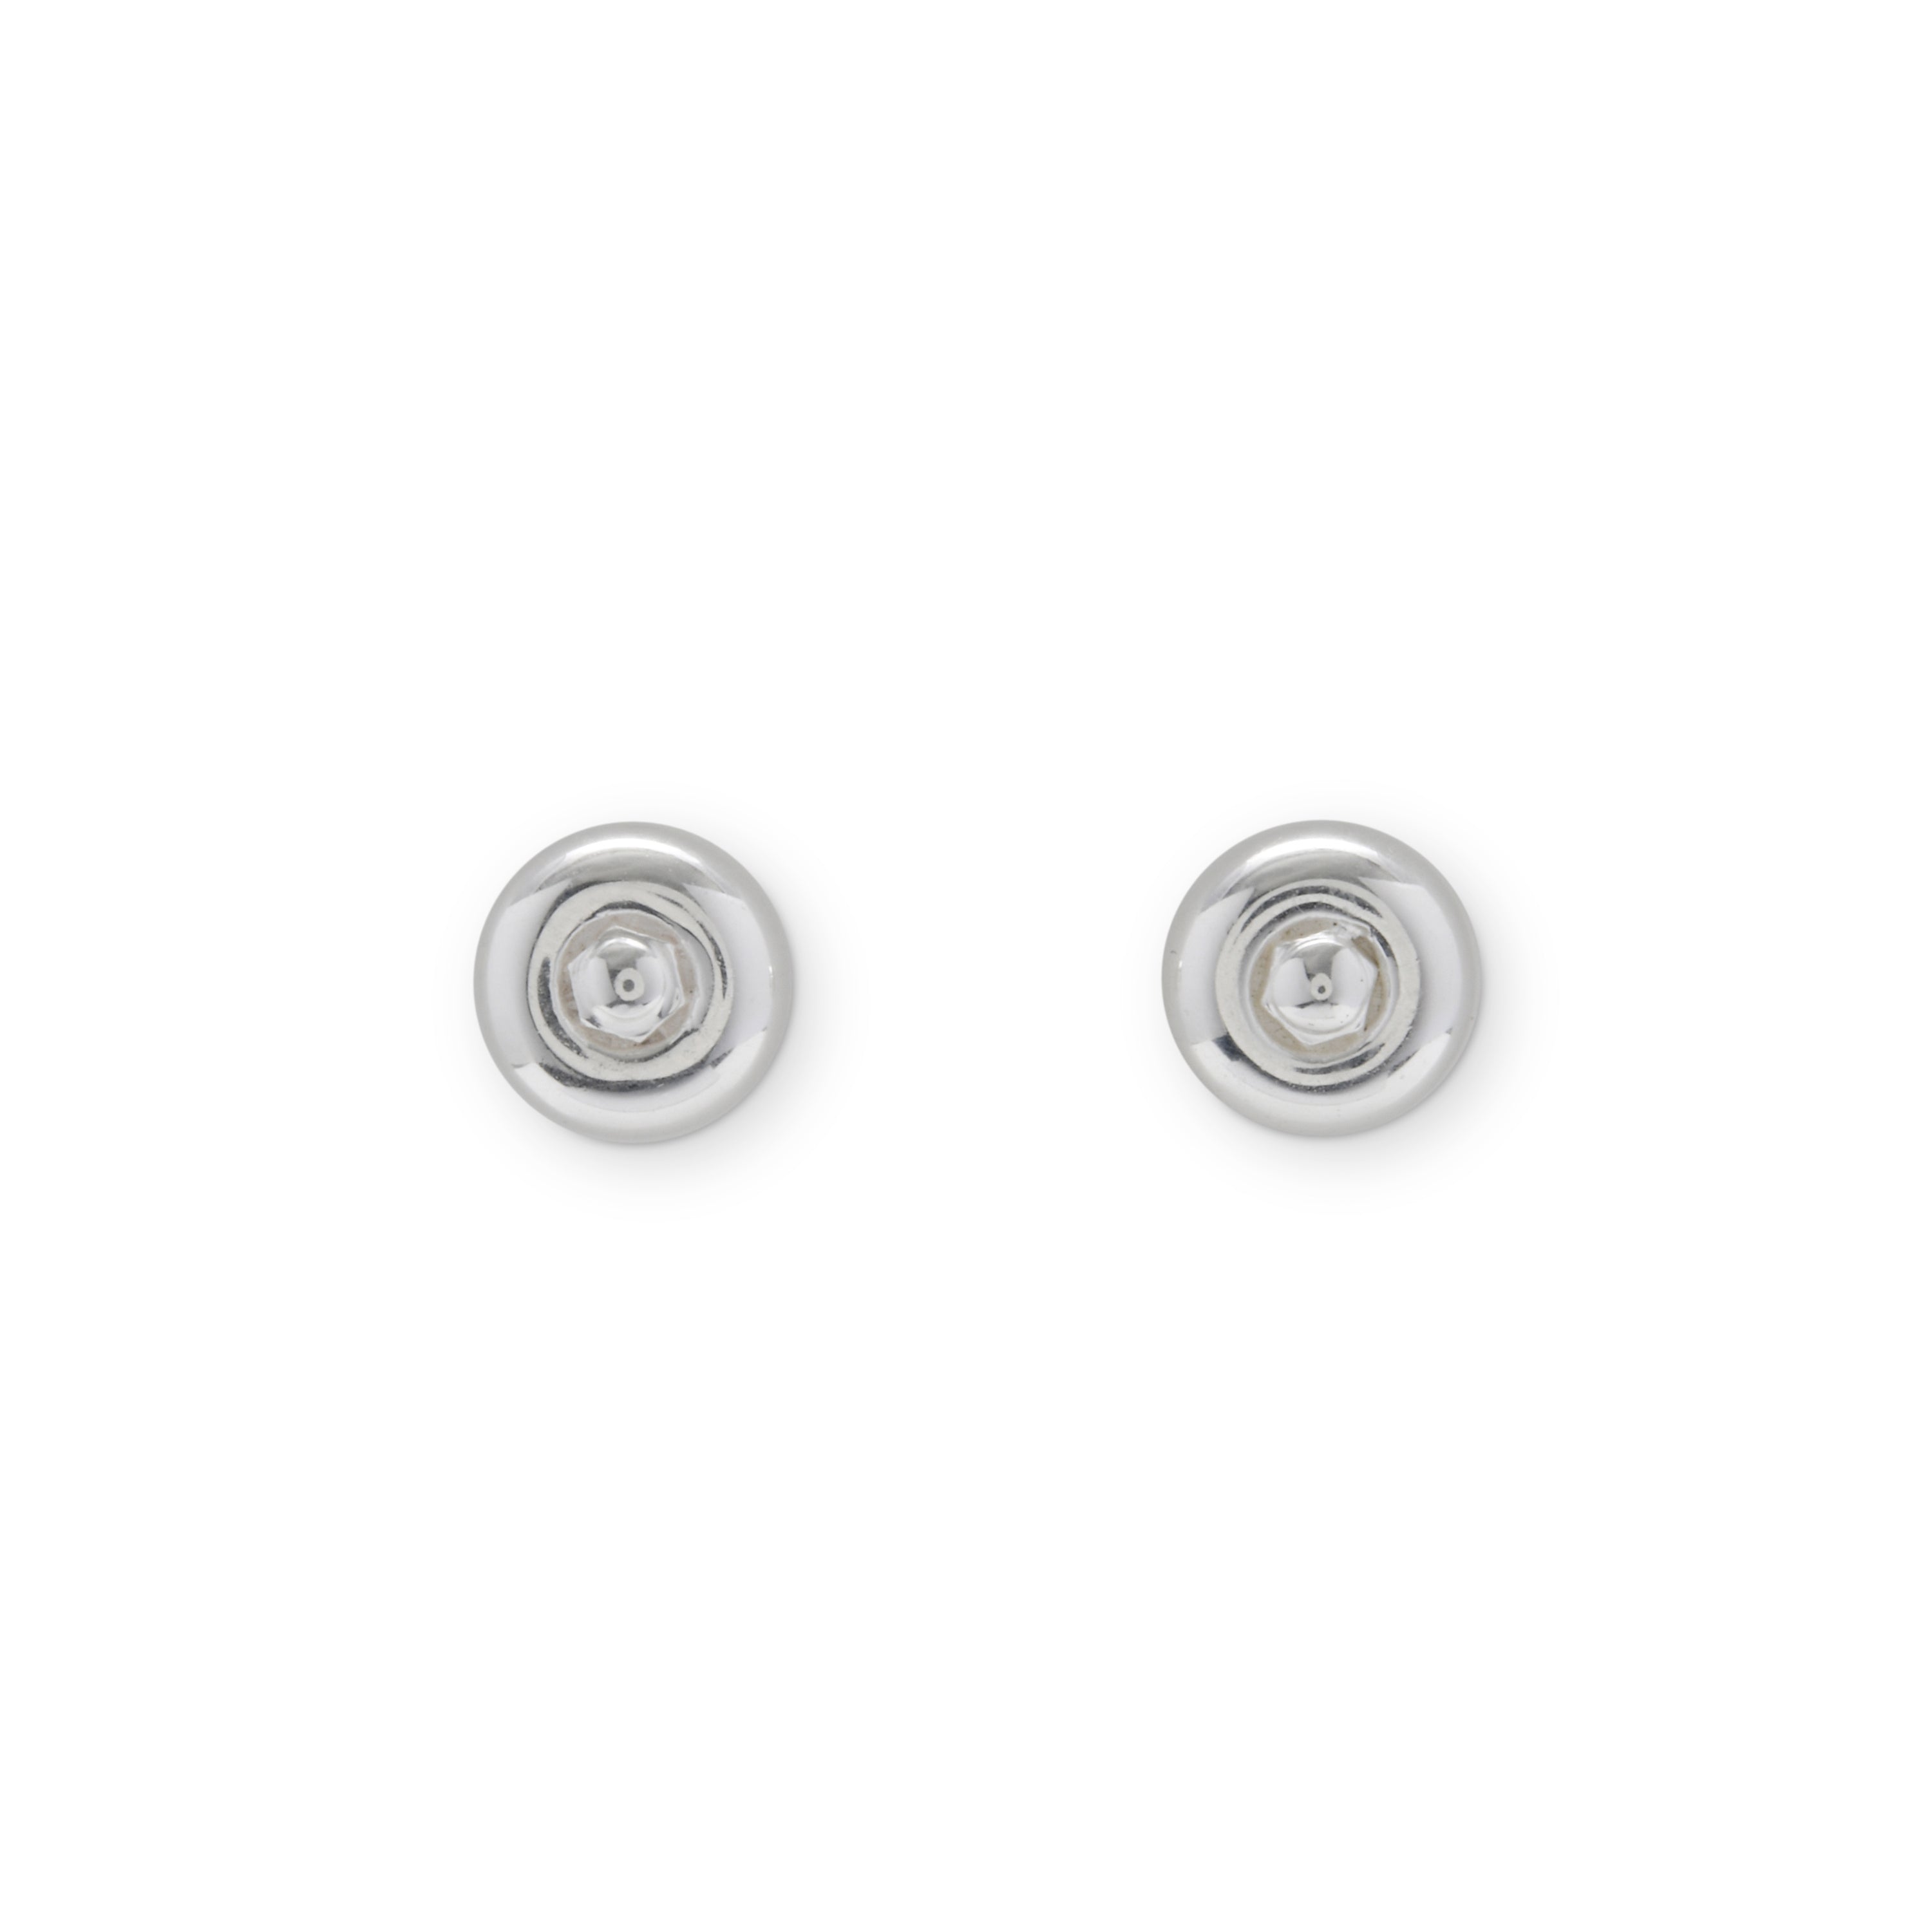 SKATE WHEEL STUDS - Sterling Silver Earring Studs